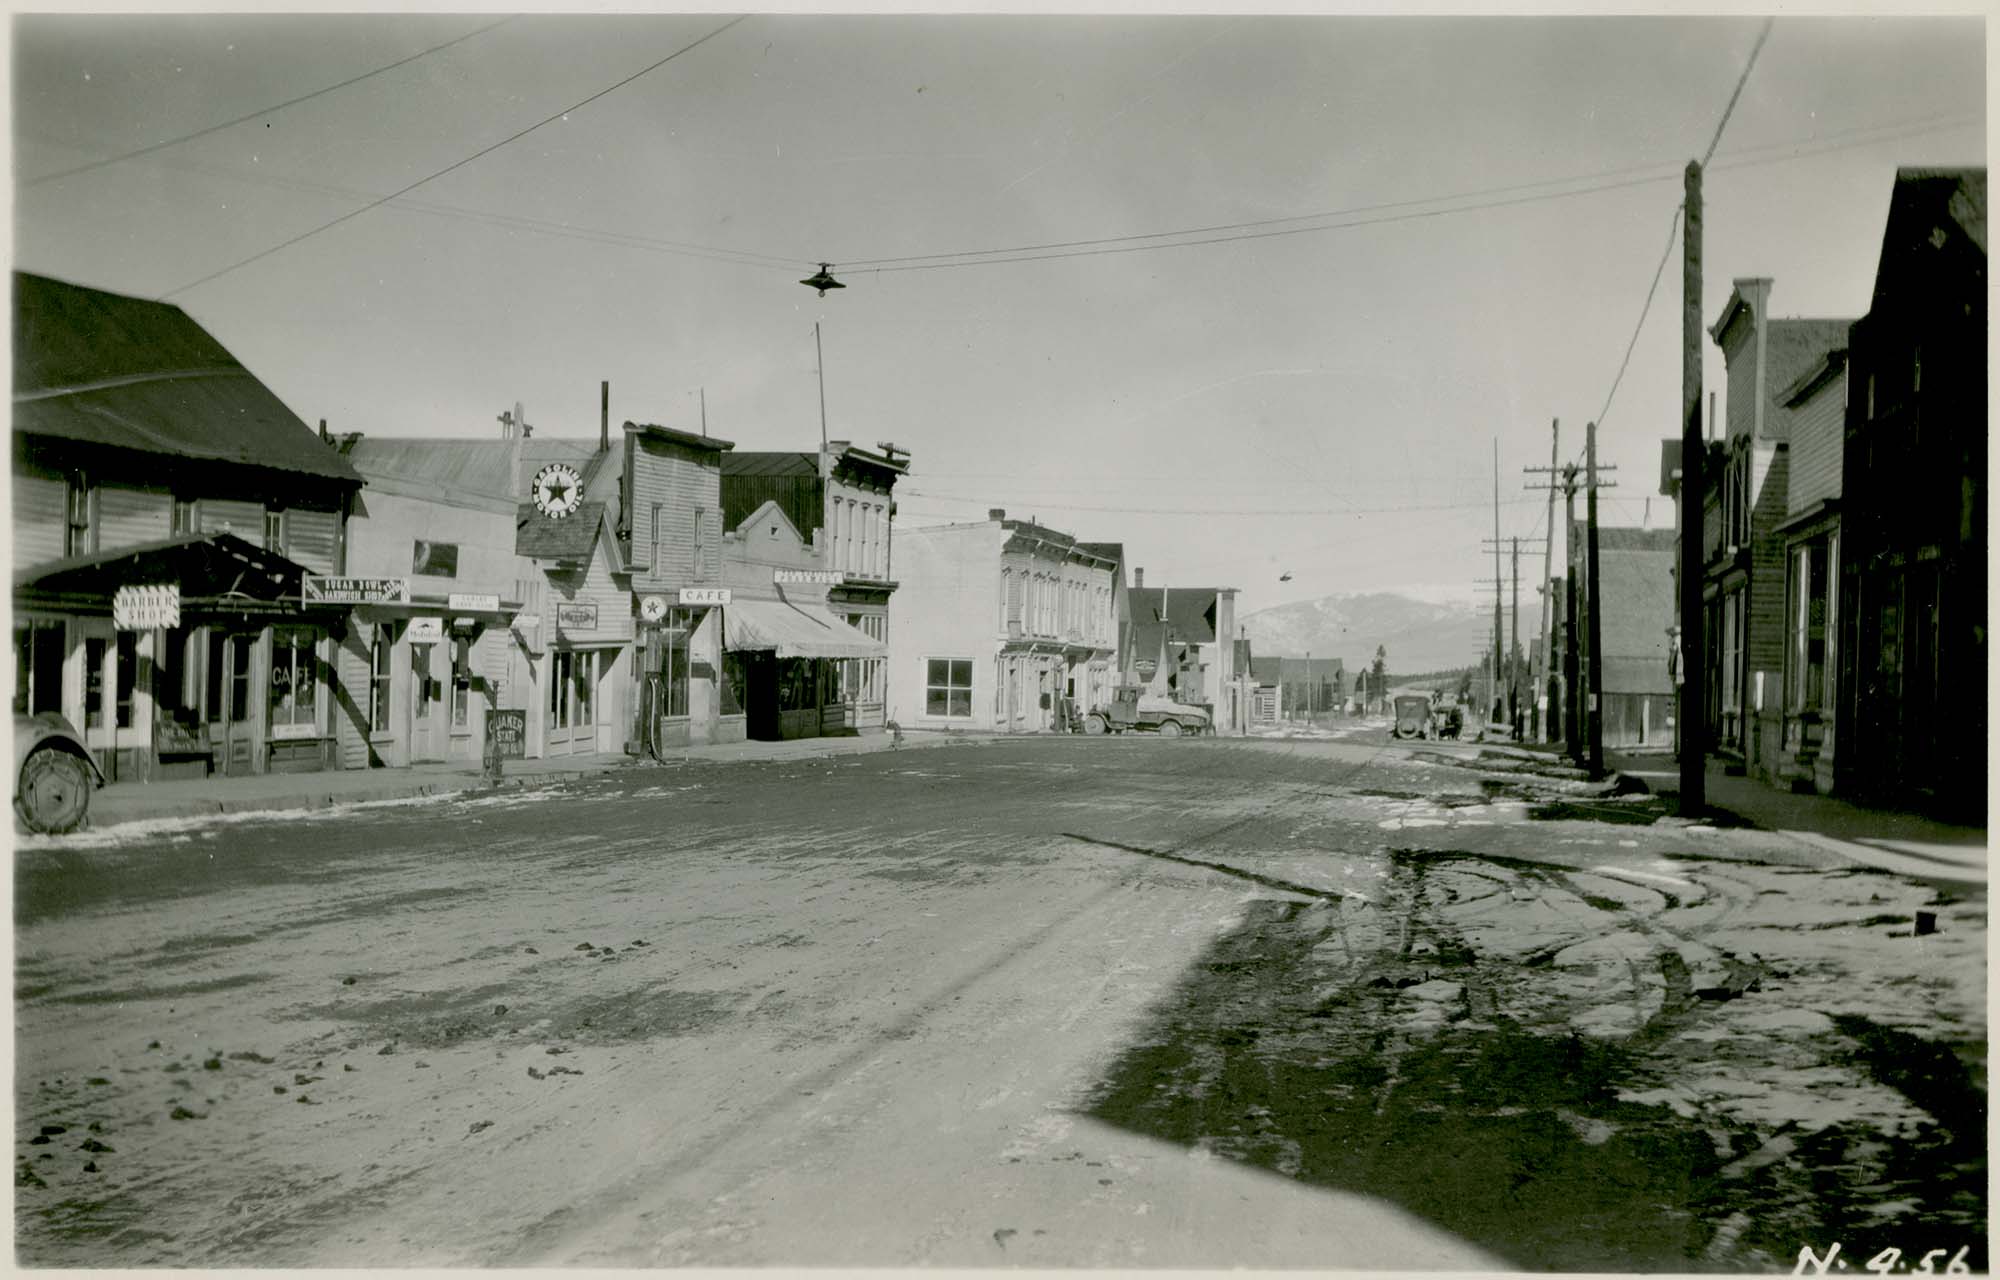 Historic Breckenridge Colorado circa 1800s